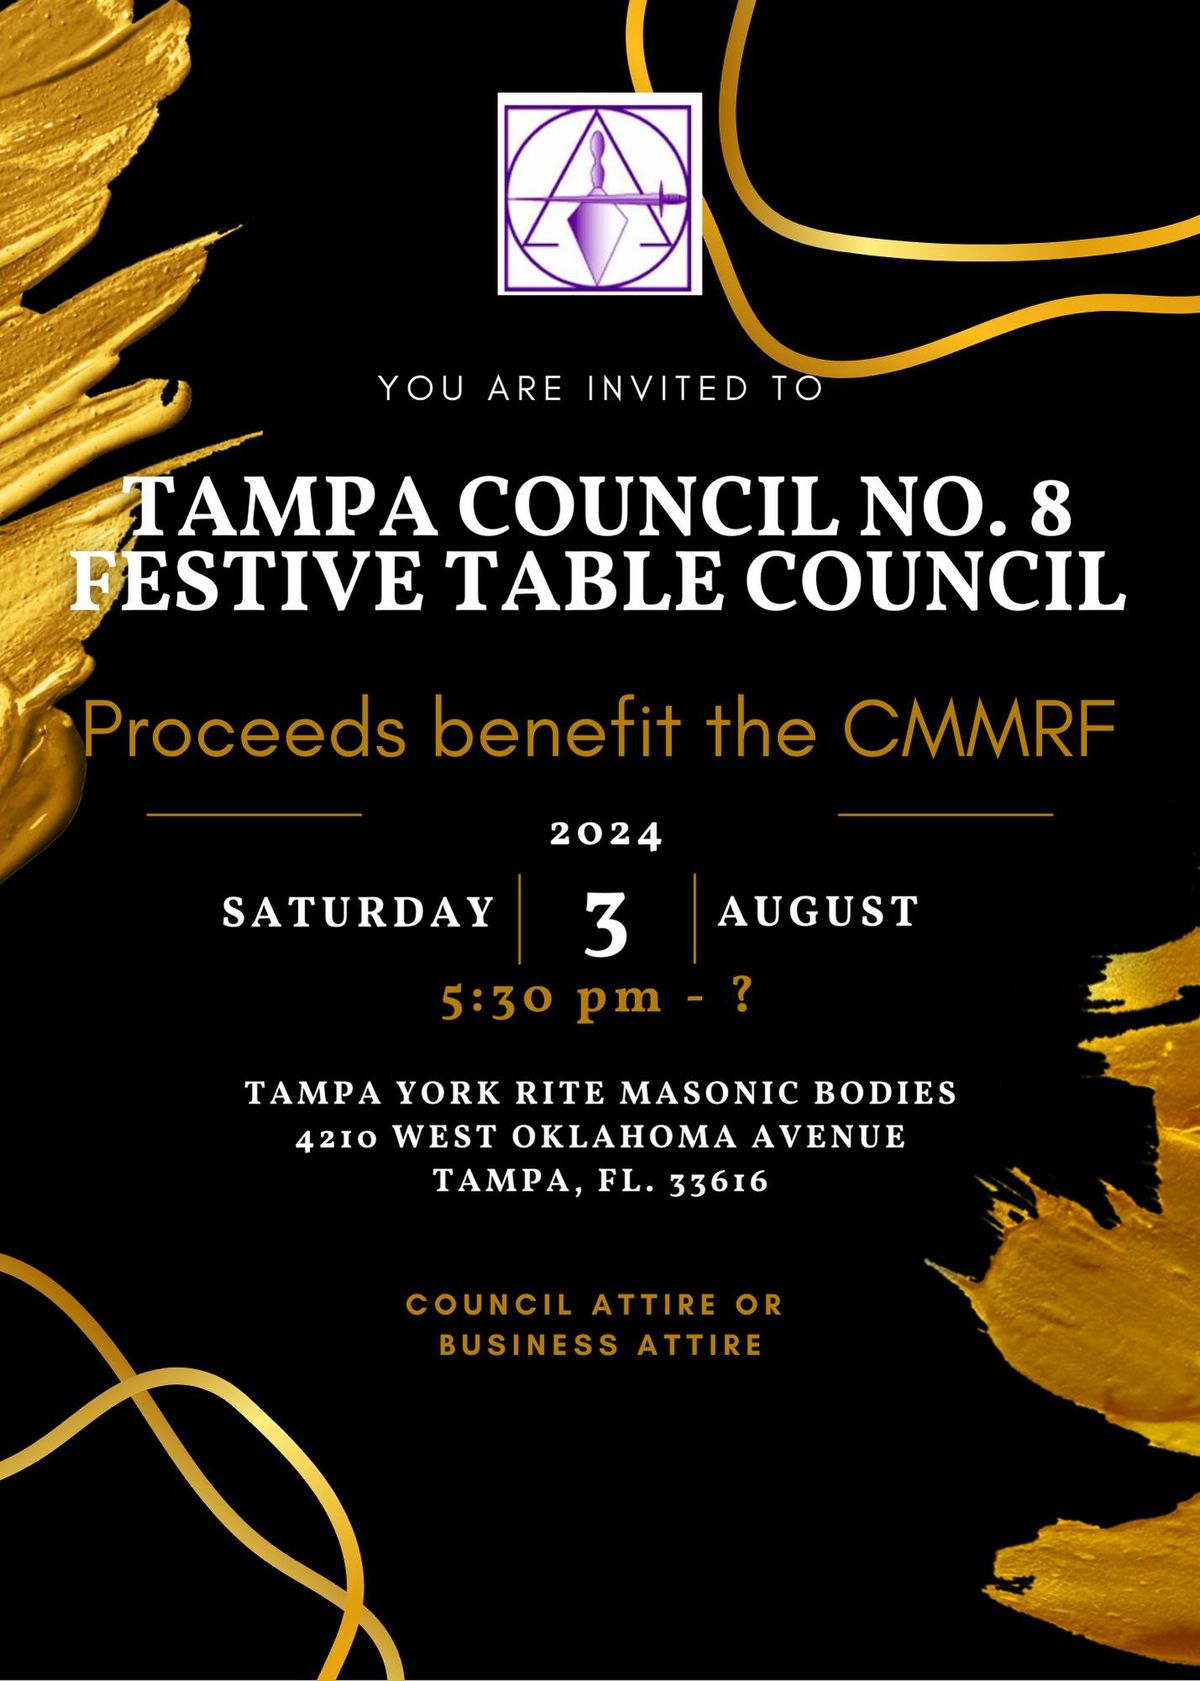 Tampa Council No. 8 Festive Table Council